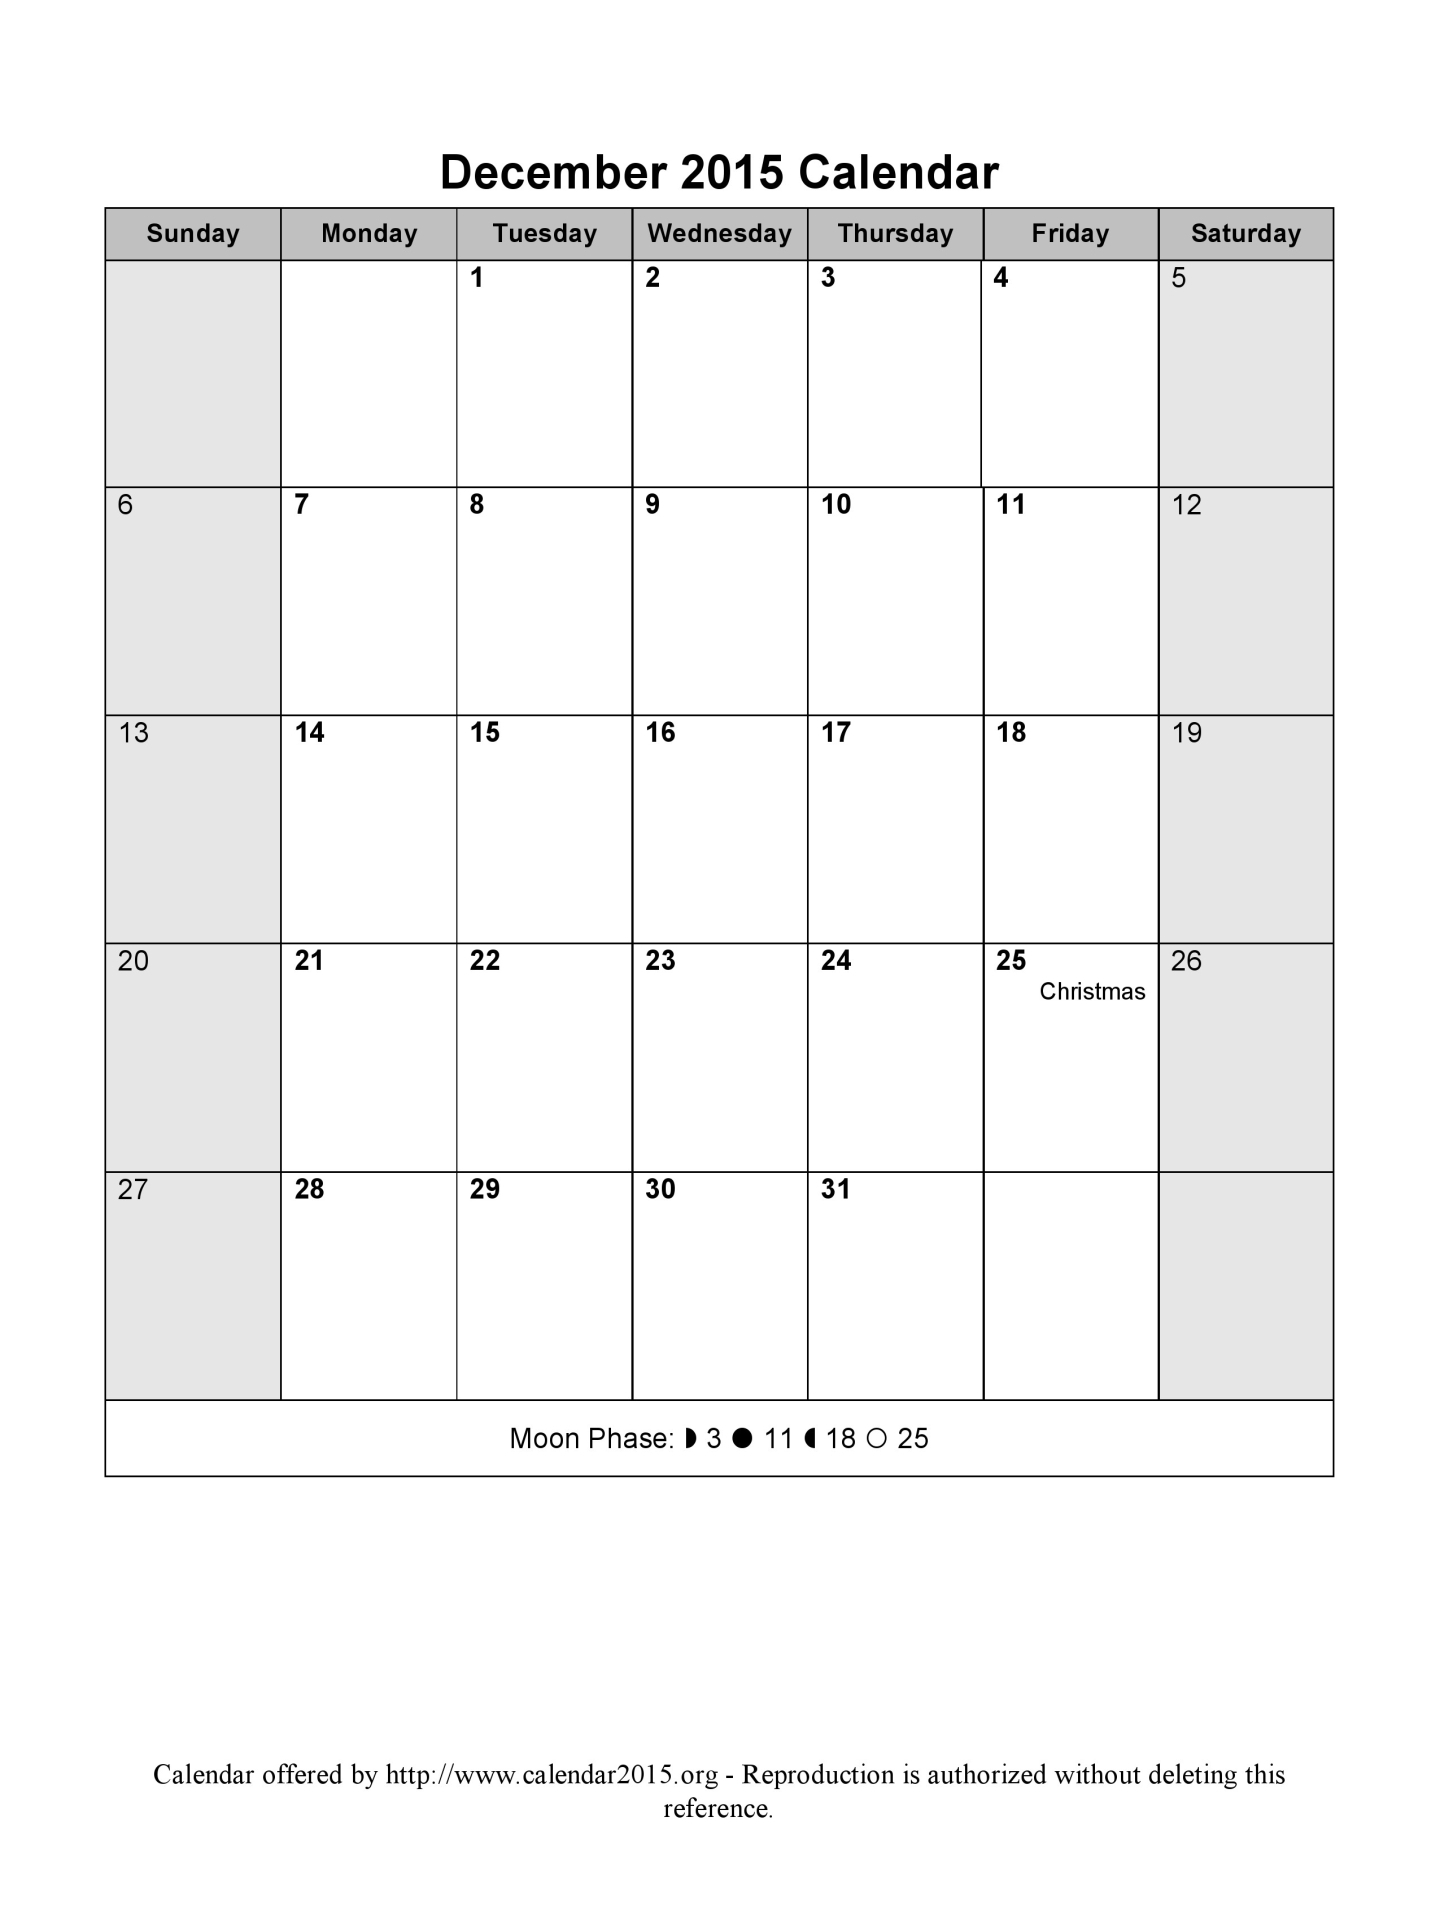 January 2015 Calendar Template